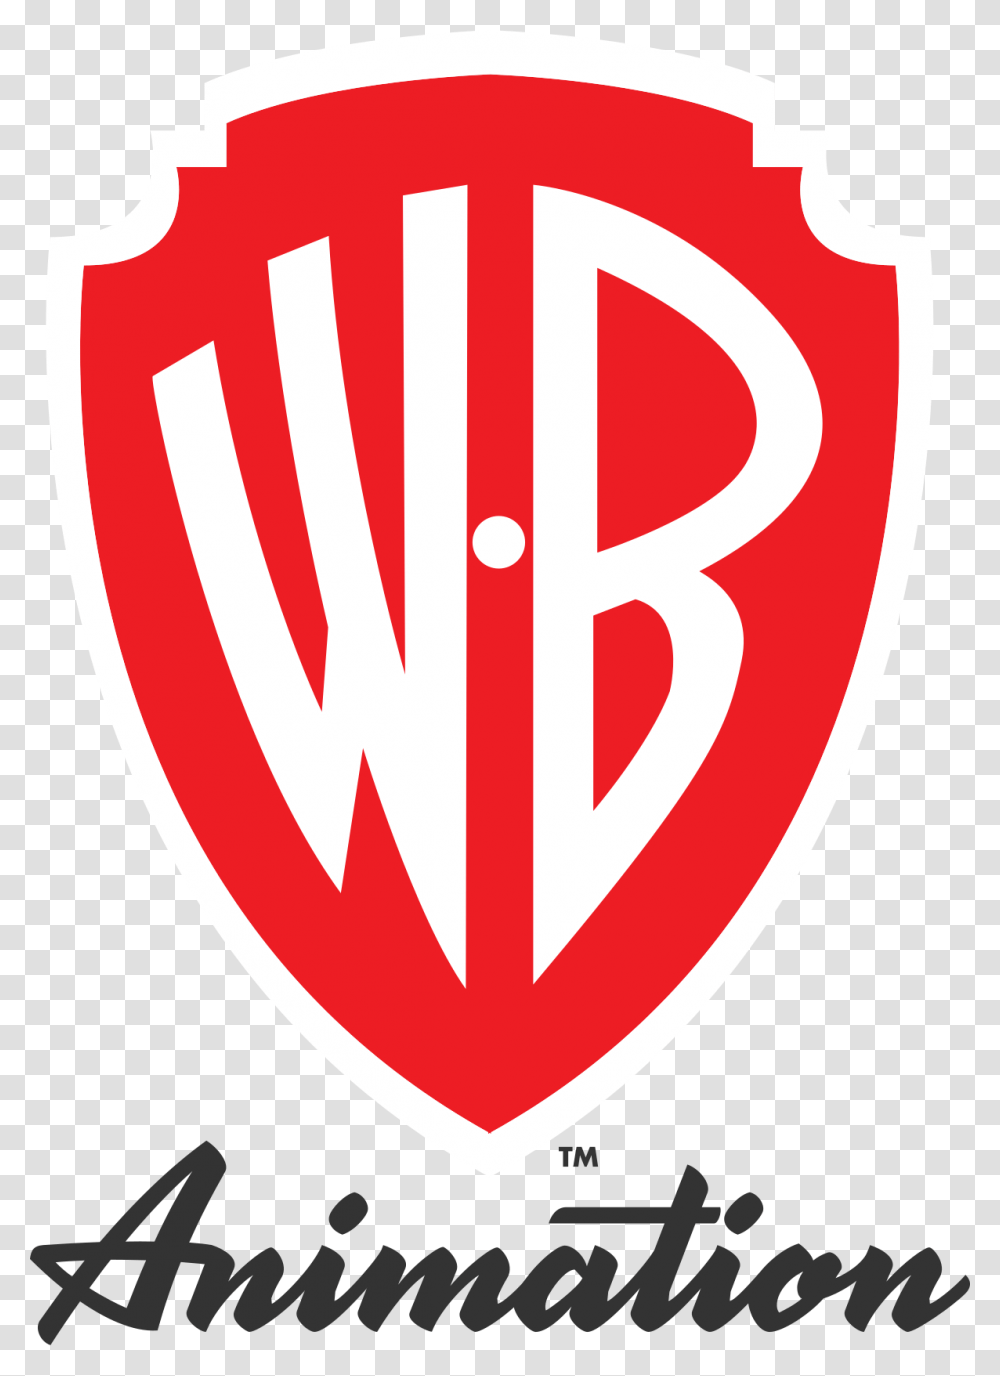 Warner Bros Animation Creator Tv Tropes Warner Bros Animation Logo 2020, Armor, Poster, Advertisement, Shield Transparent Png